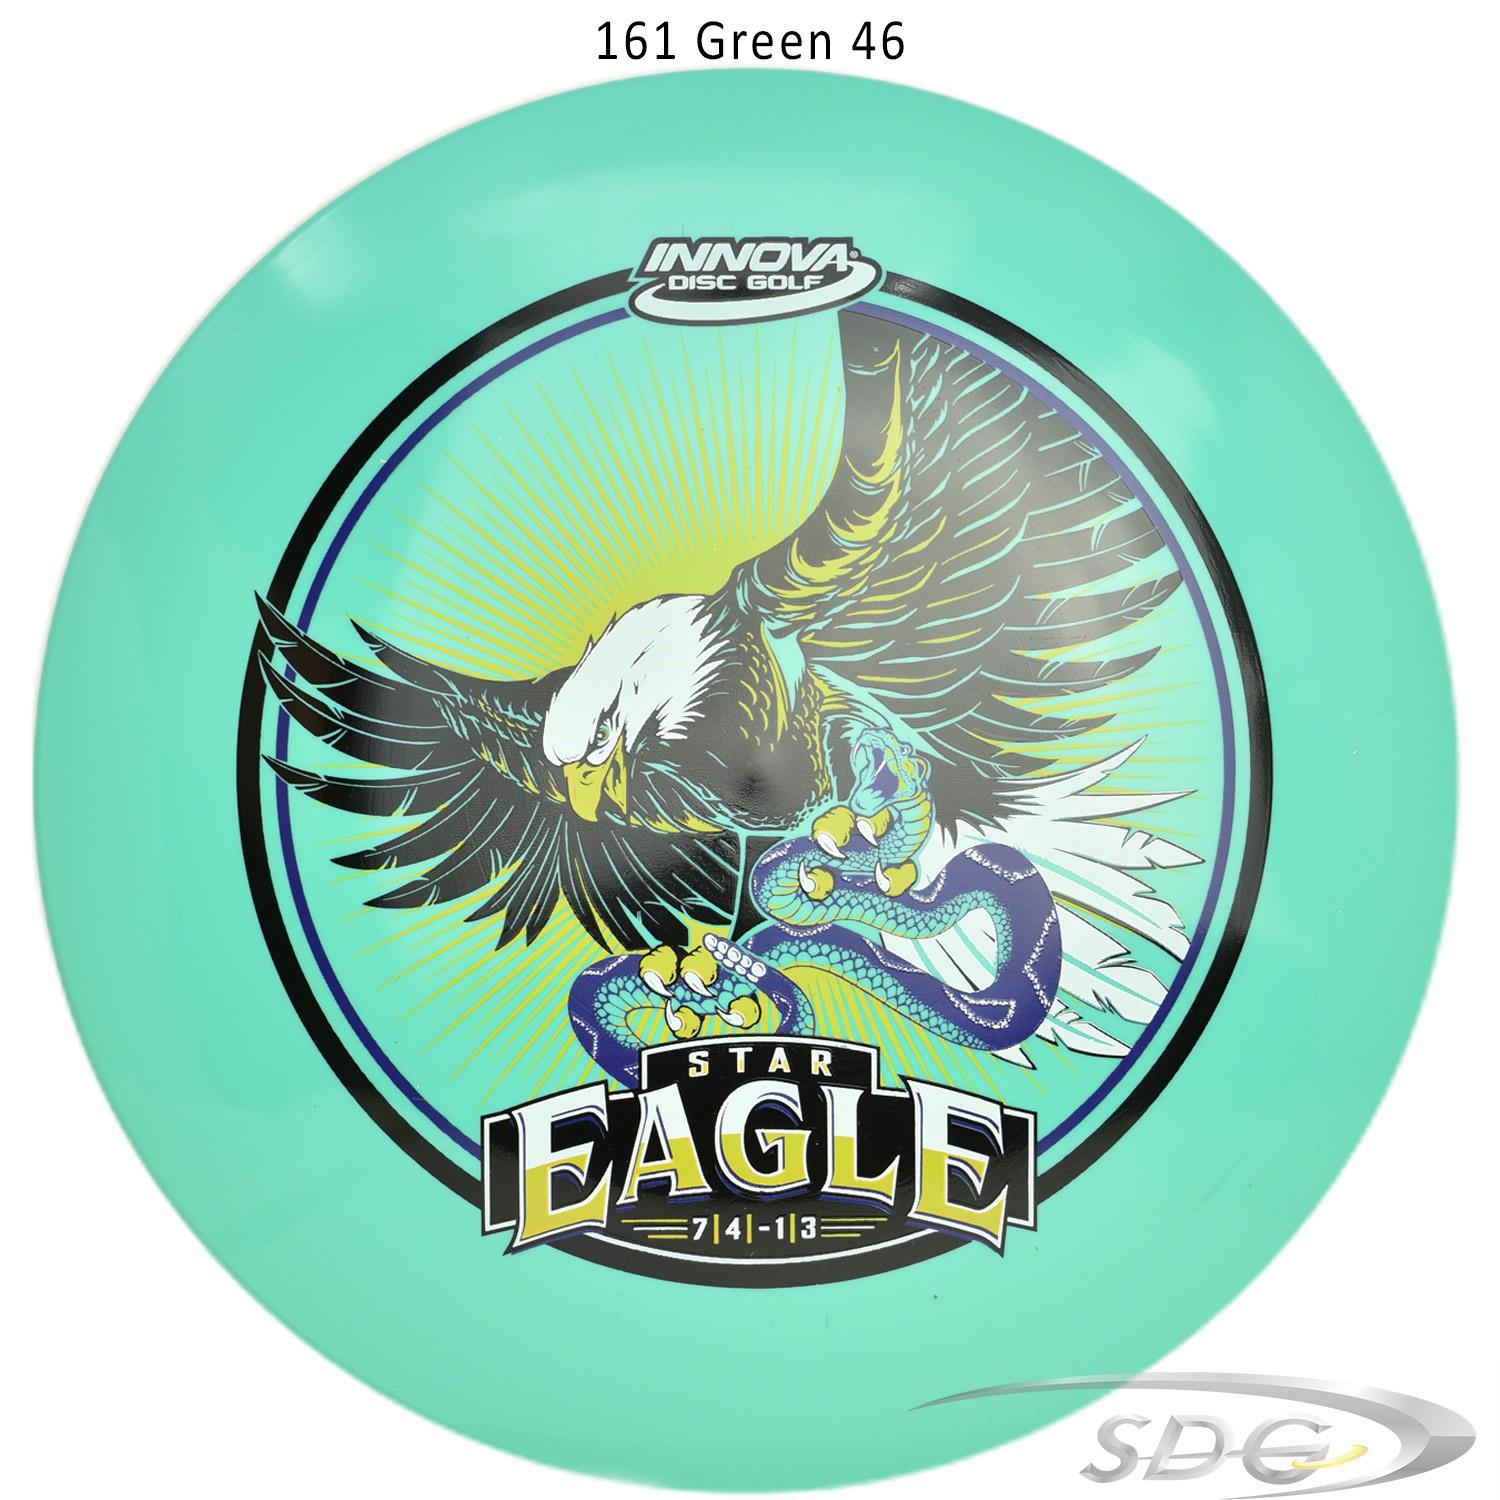 innova-star-eagle-disc-golf-fairway-driver 161 Green 46 